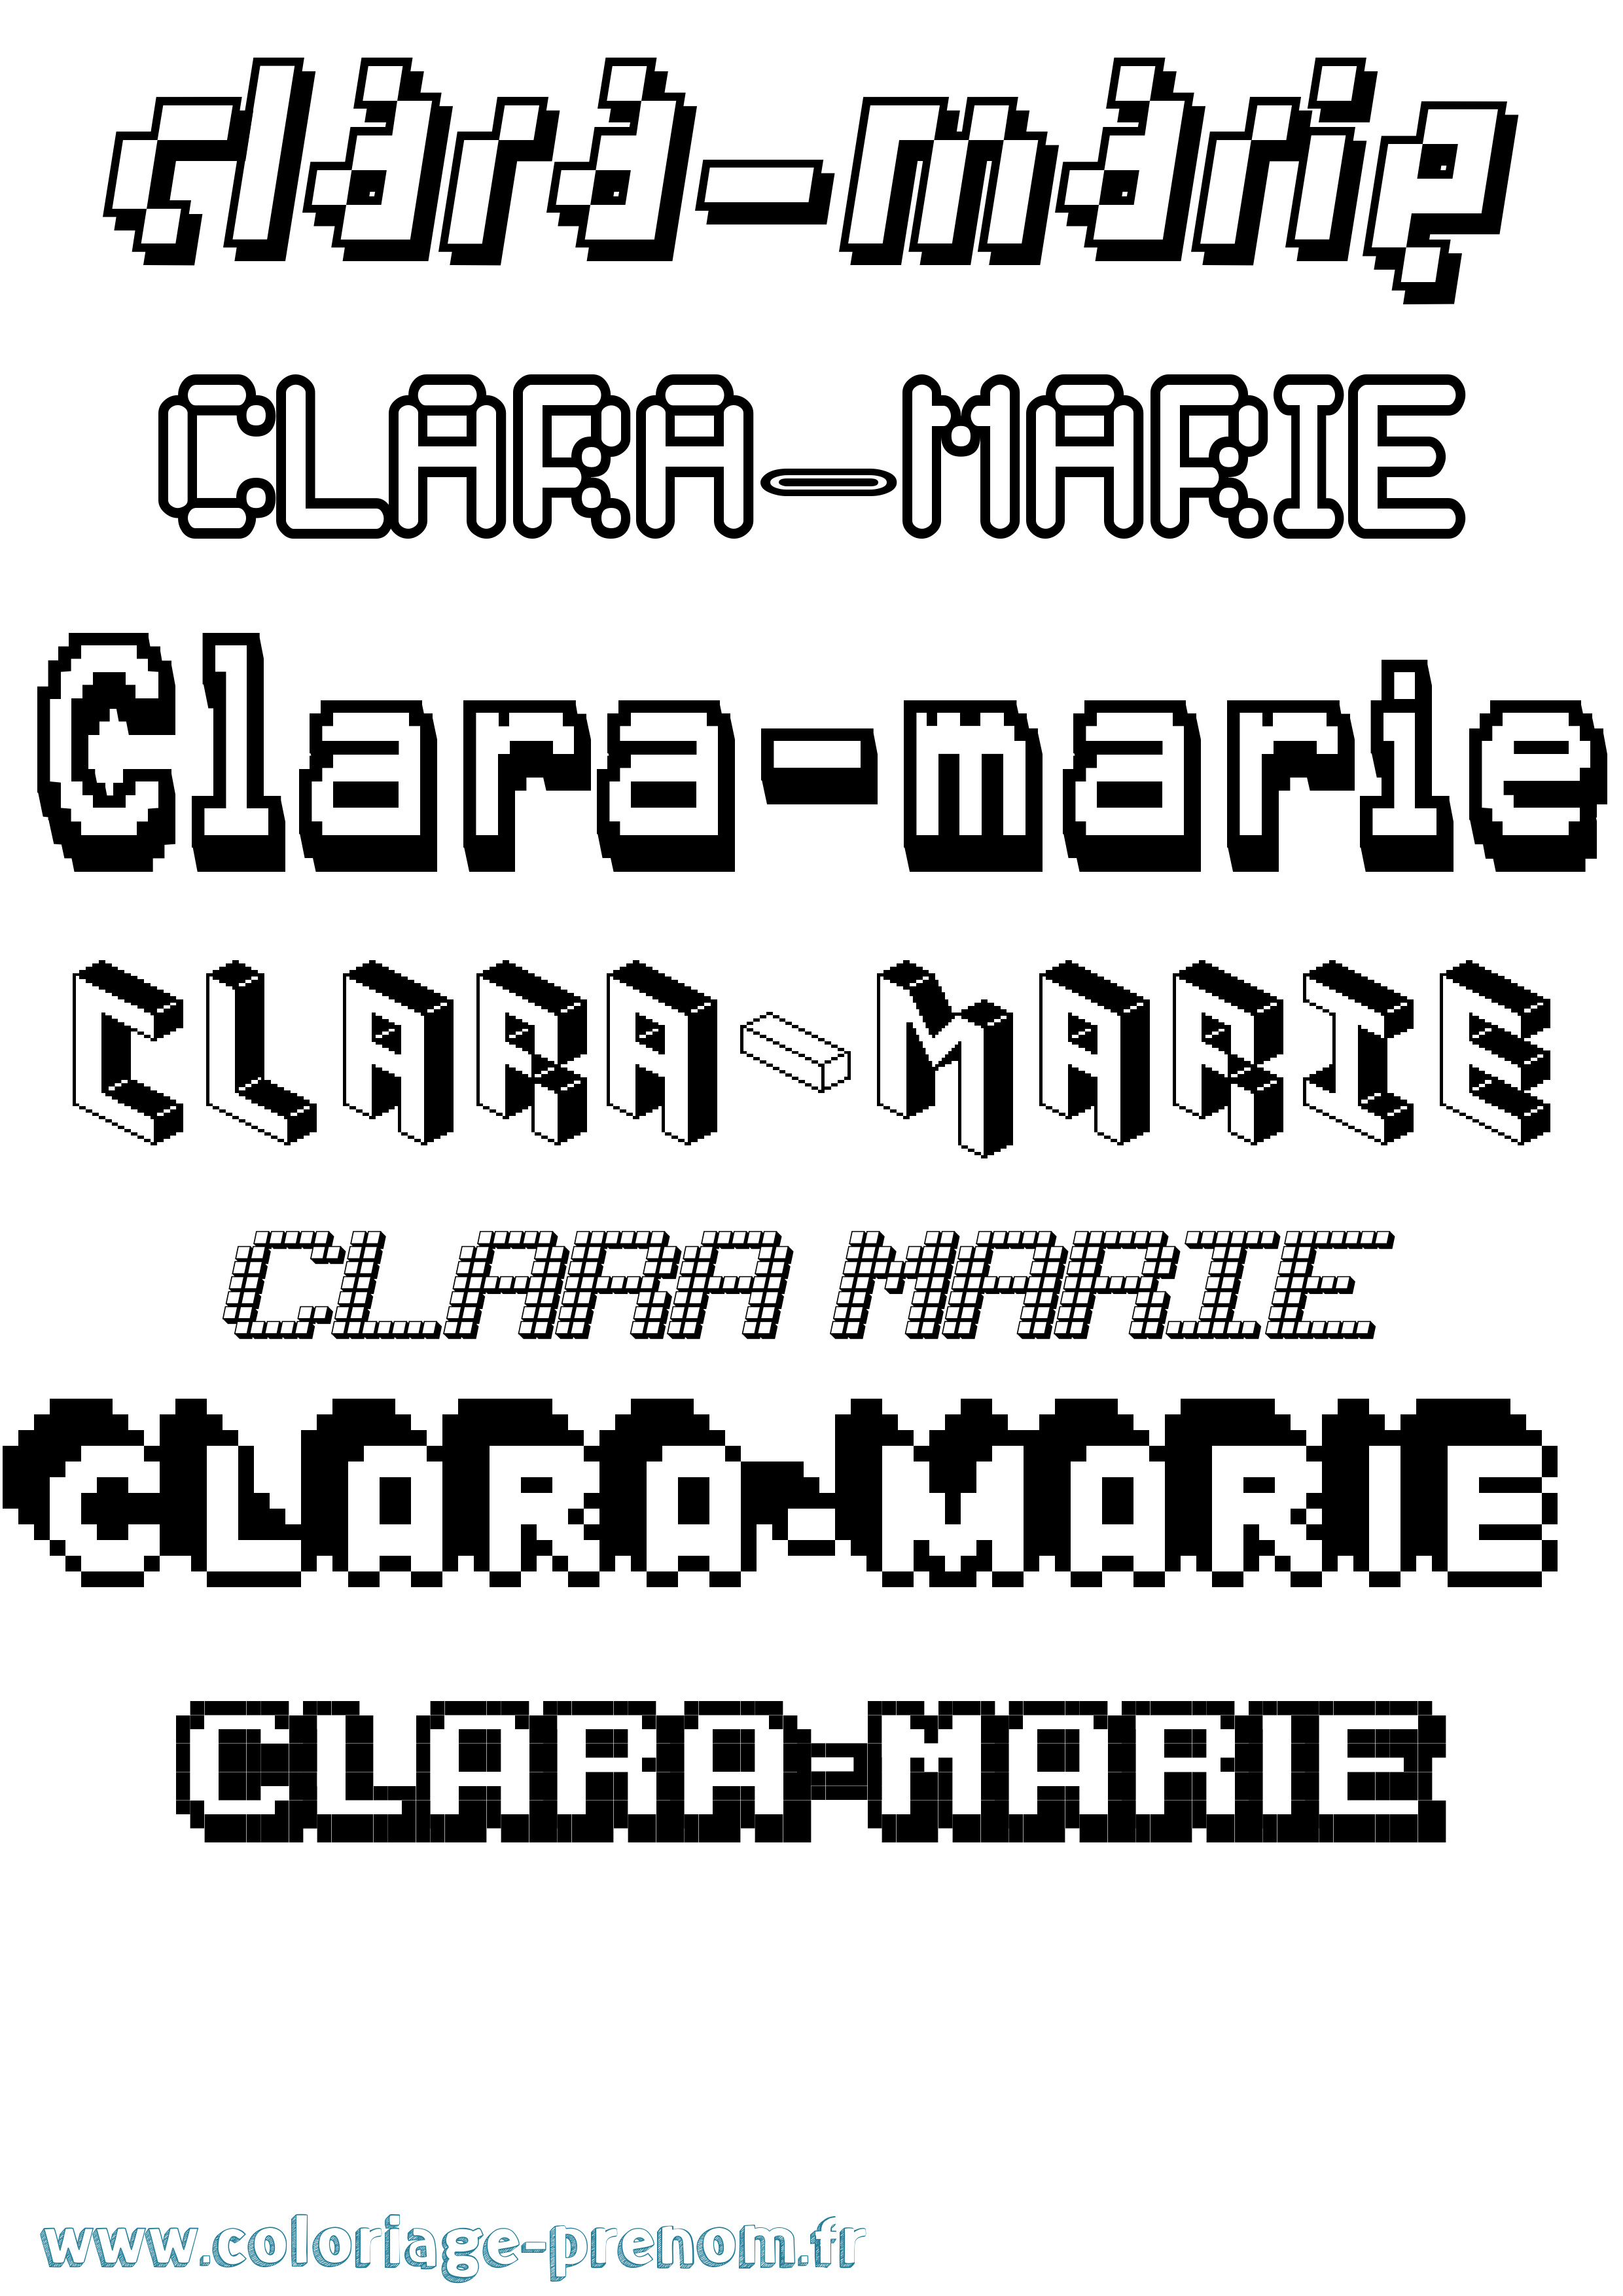 Coloriage prénom Clara-Marie Pixel